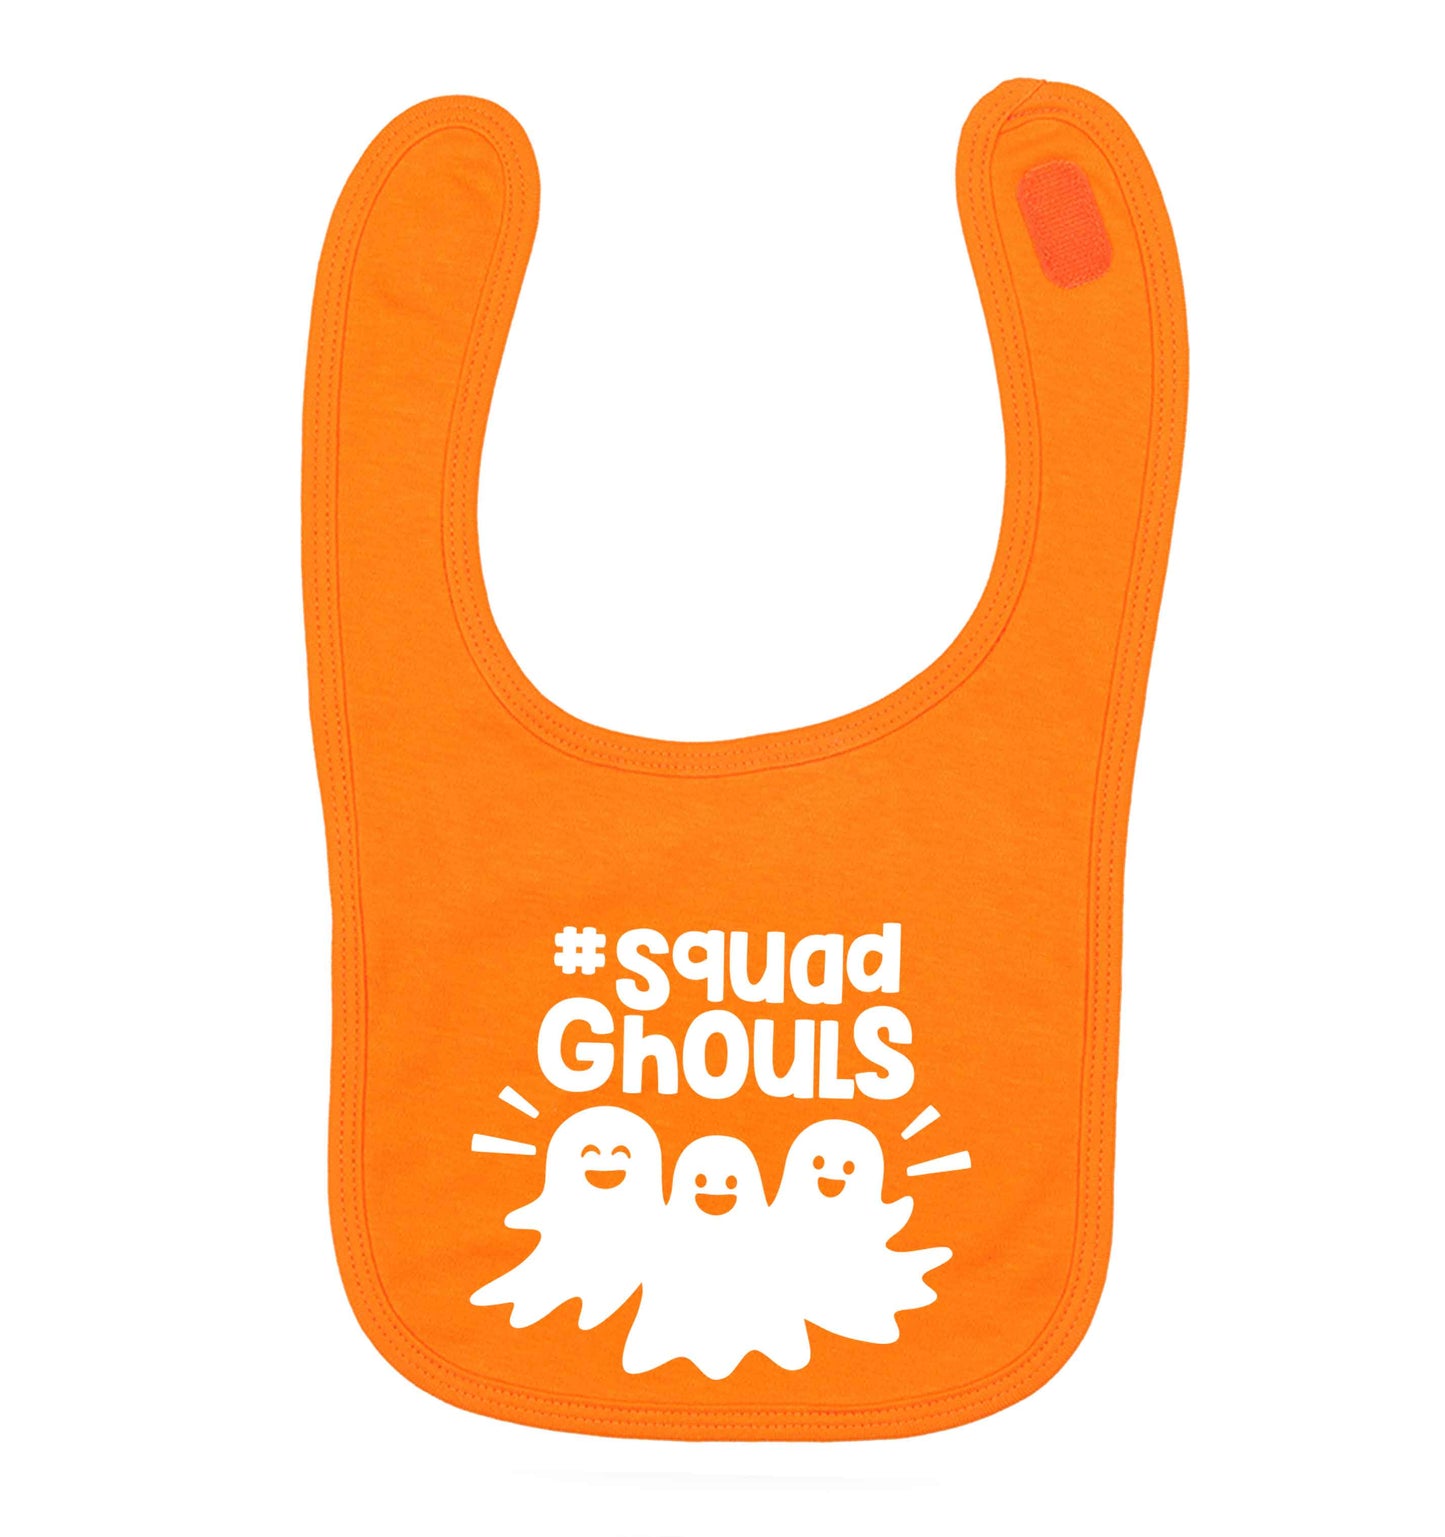 Squad ghouls Kit orange baby bib